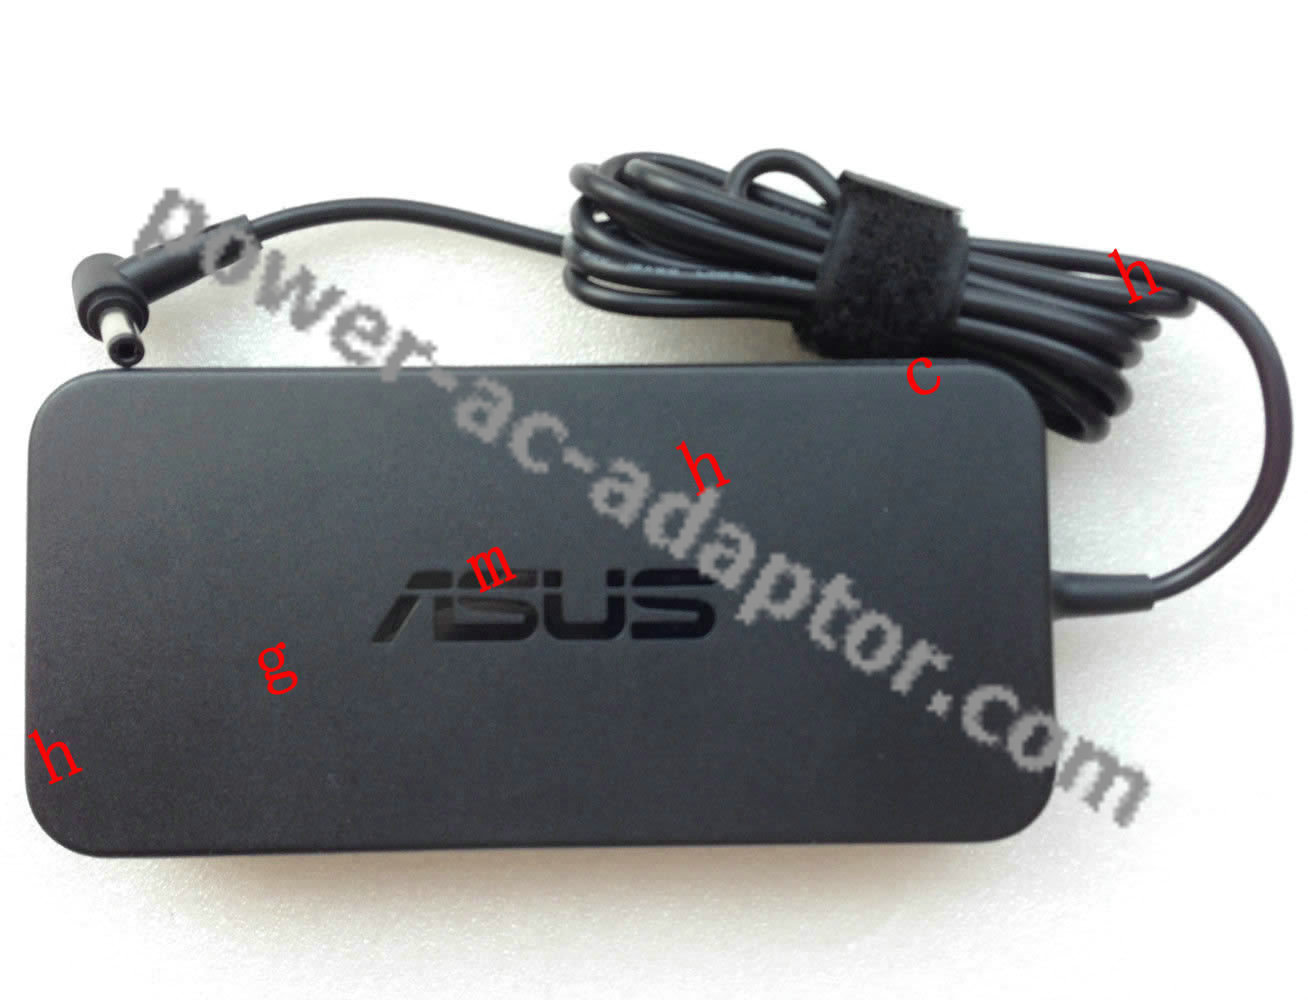 Asus 120W Slim G56JK-DM127H Gaming Laptop AC Adapter for